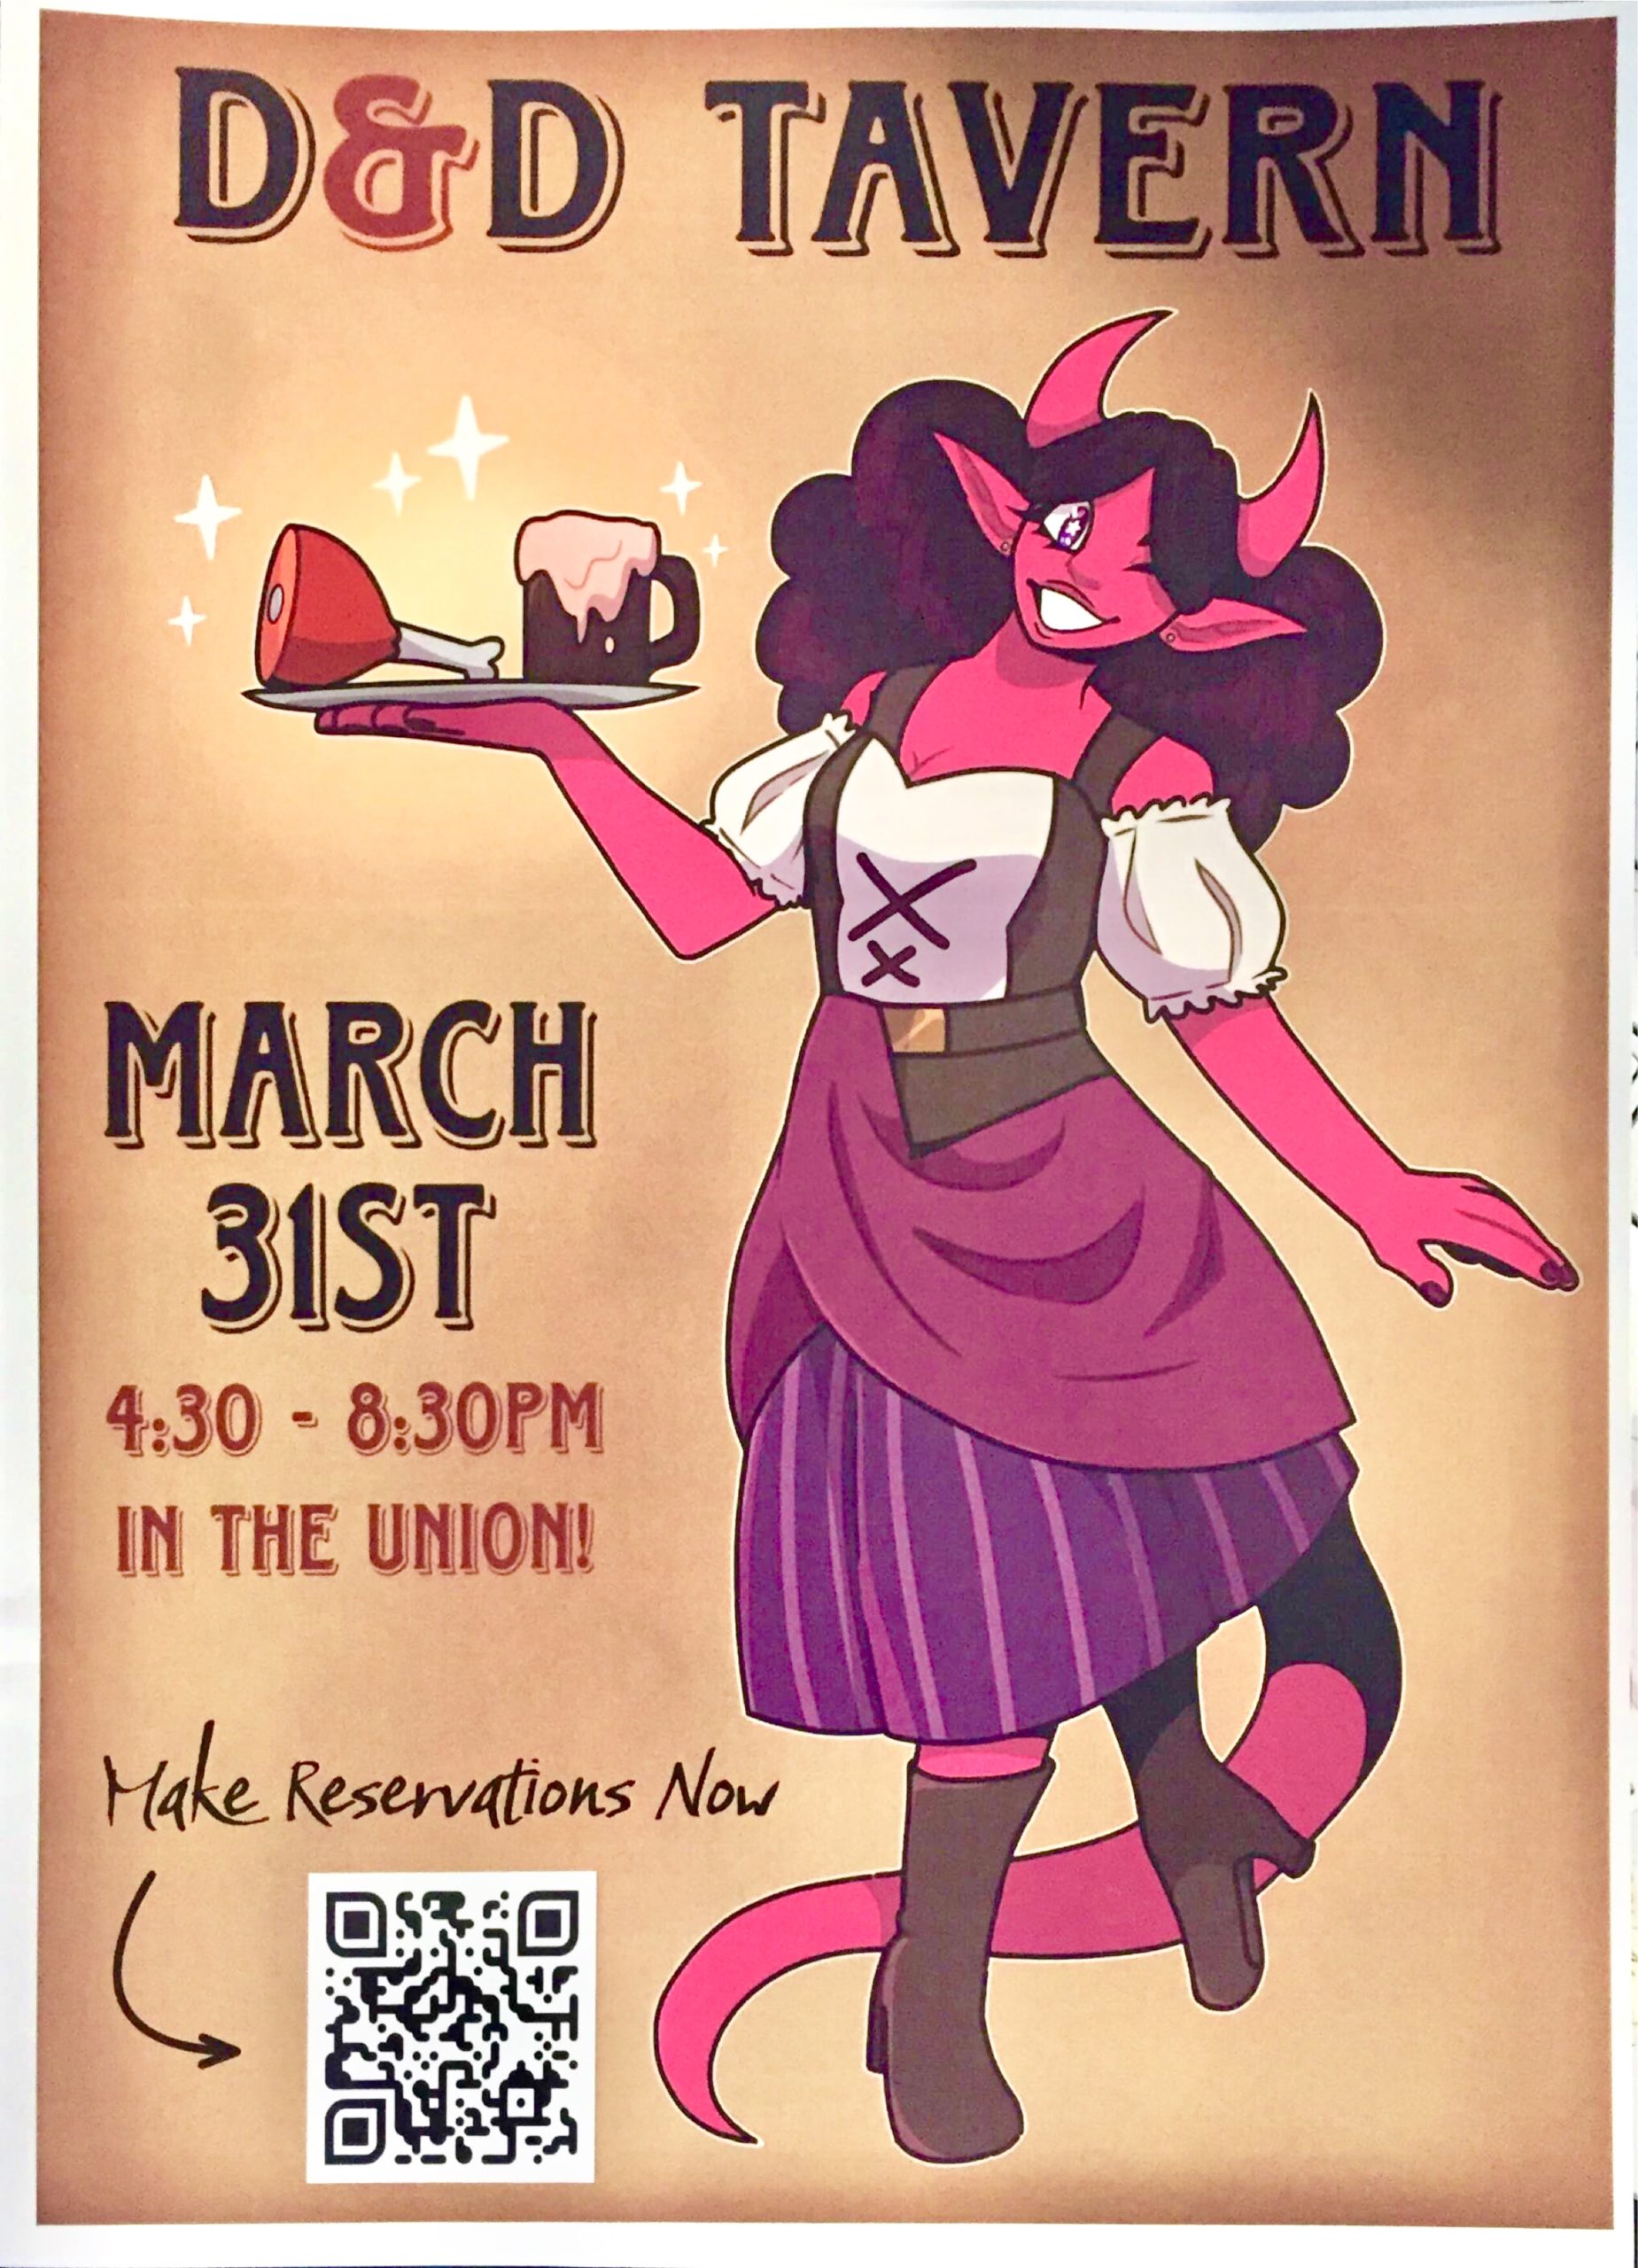 D&D Tavern Event, March 31